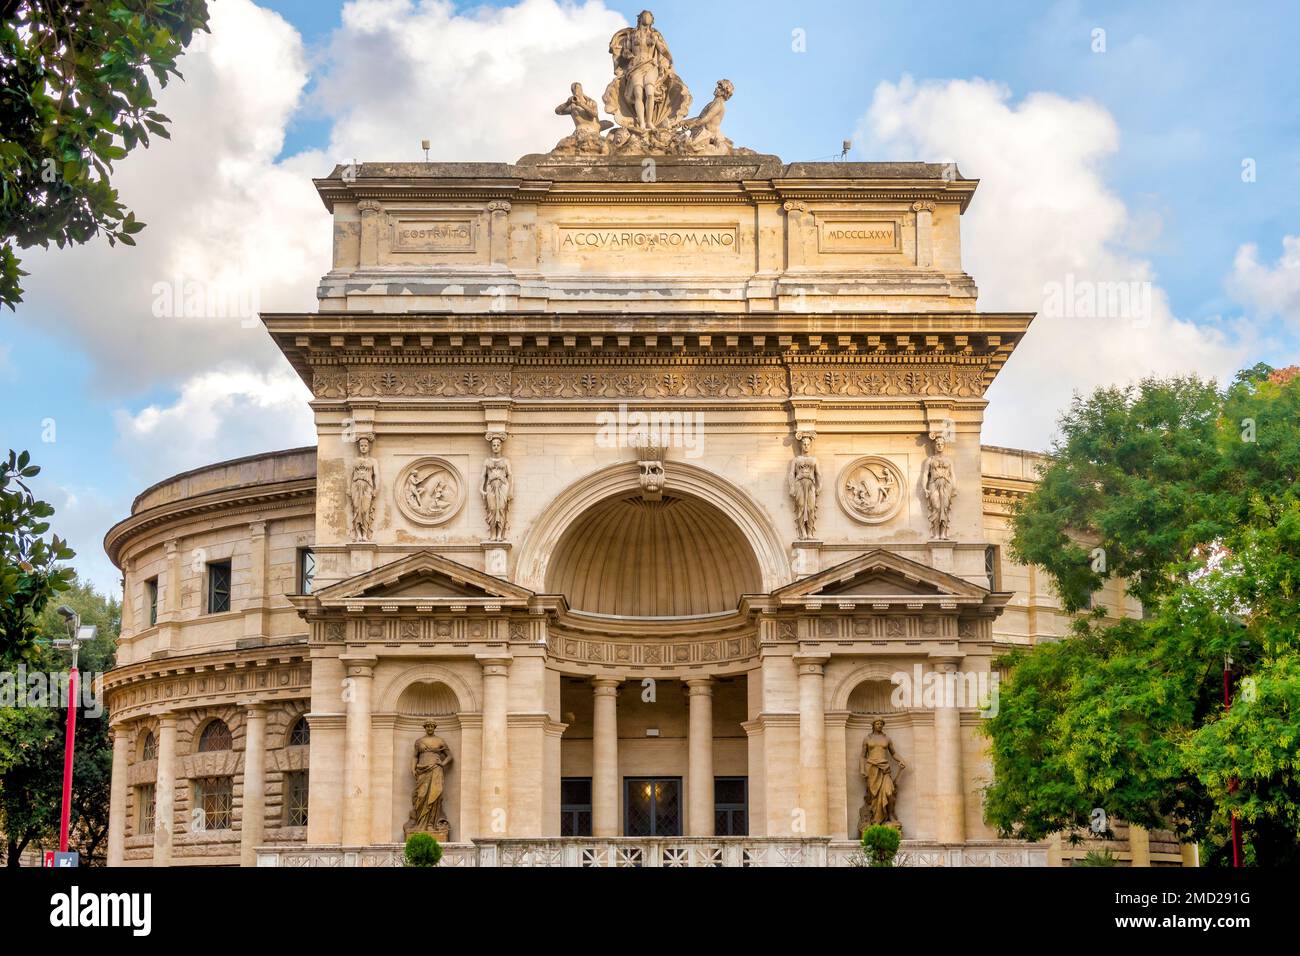 Ancien Acquario Romano maintenant Casa dell'Architettura, Rome, Italie Banque D'Images